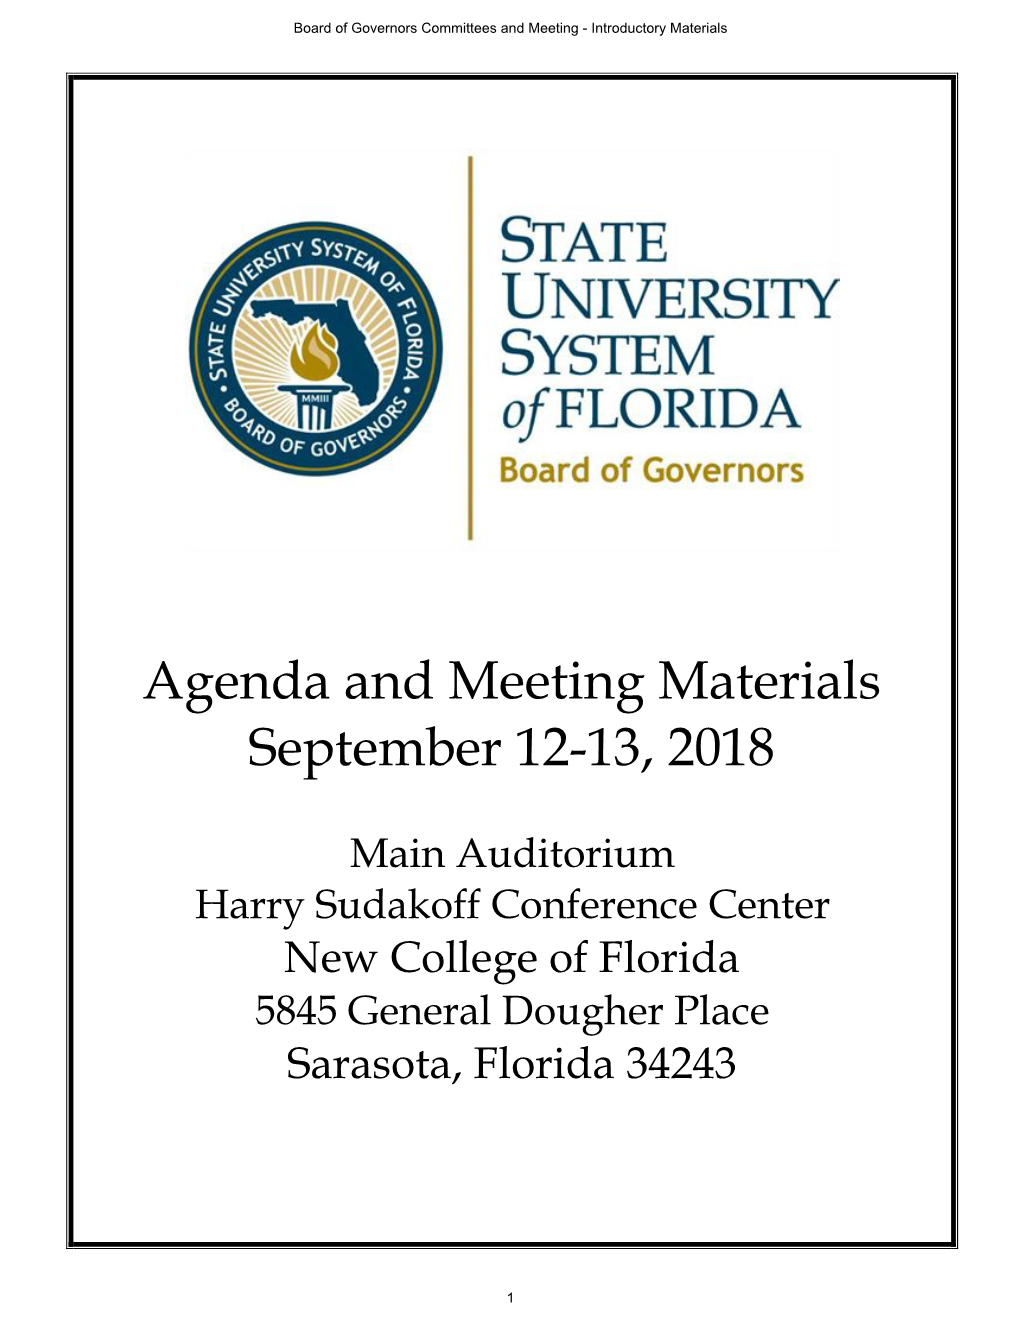 Agenda and Meeting Materials September 12-13, 2018